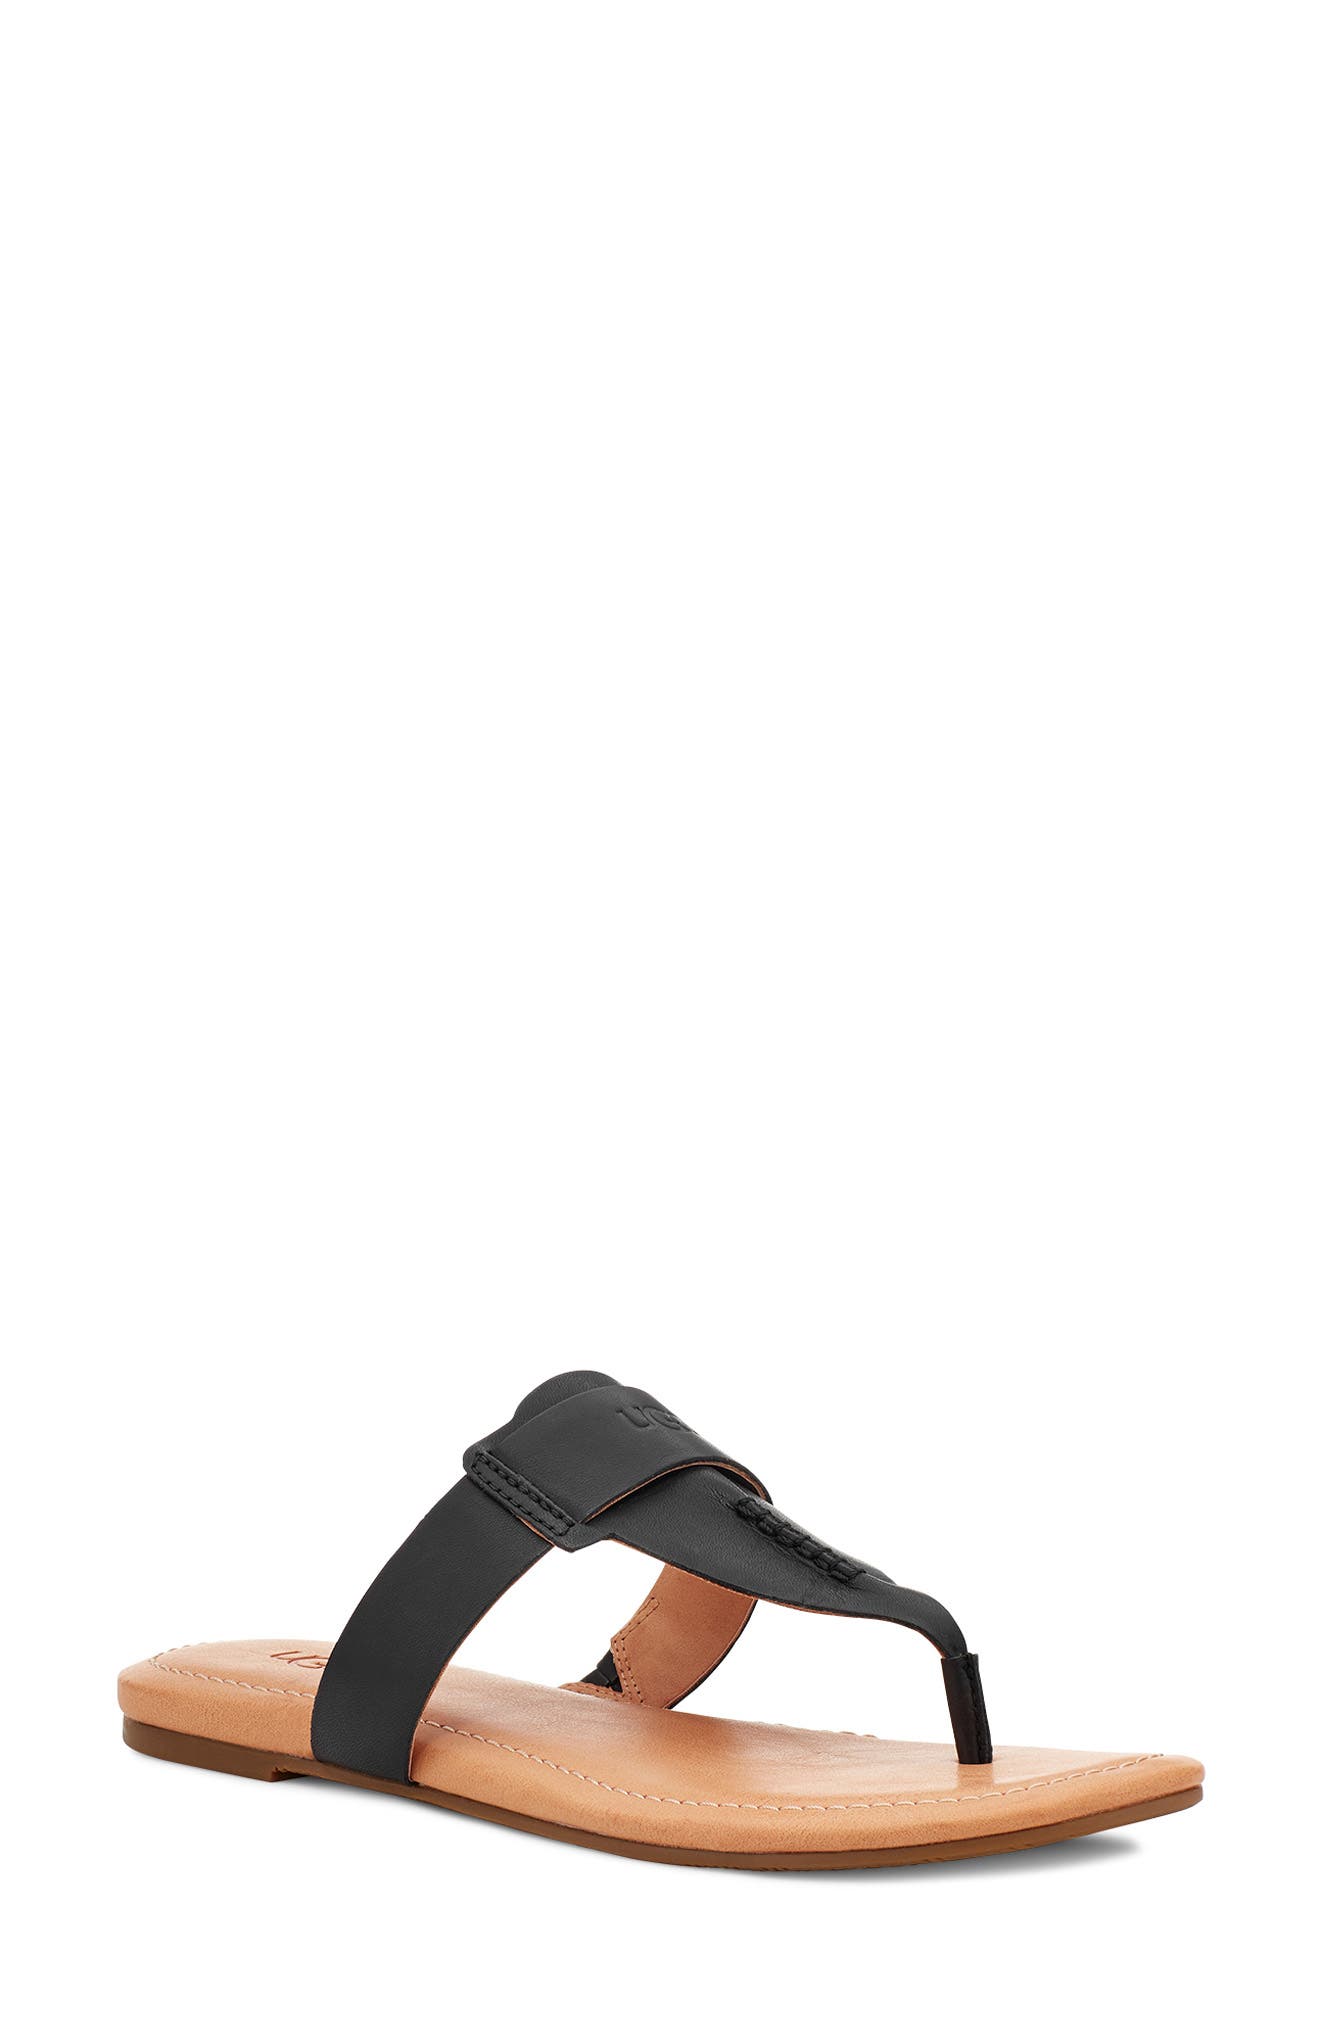 Buy > sandals 2 straps > in stock